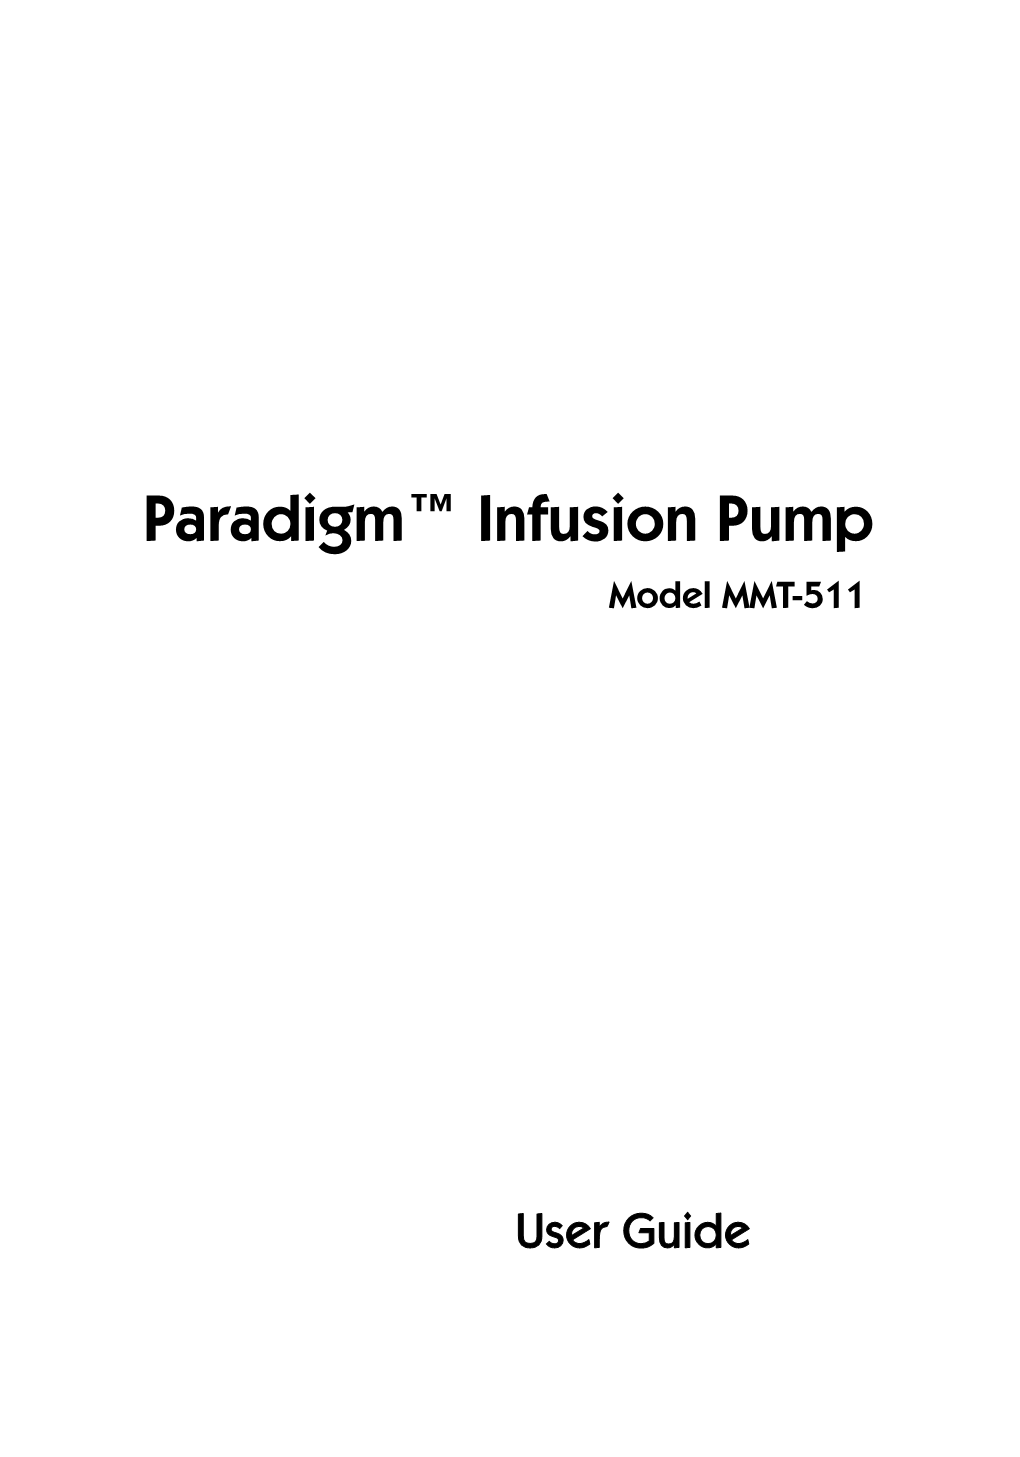 Paradigm™ Infusion Pump Model MMT-511